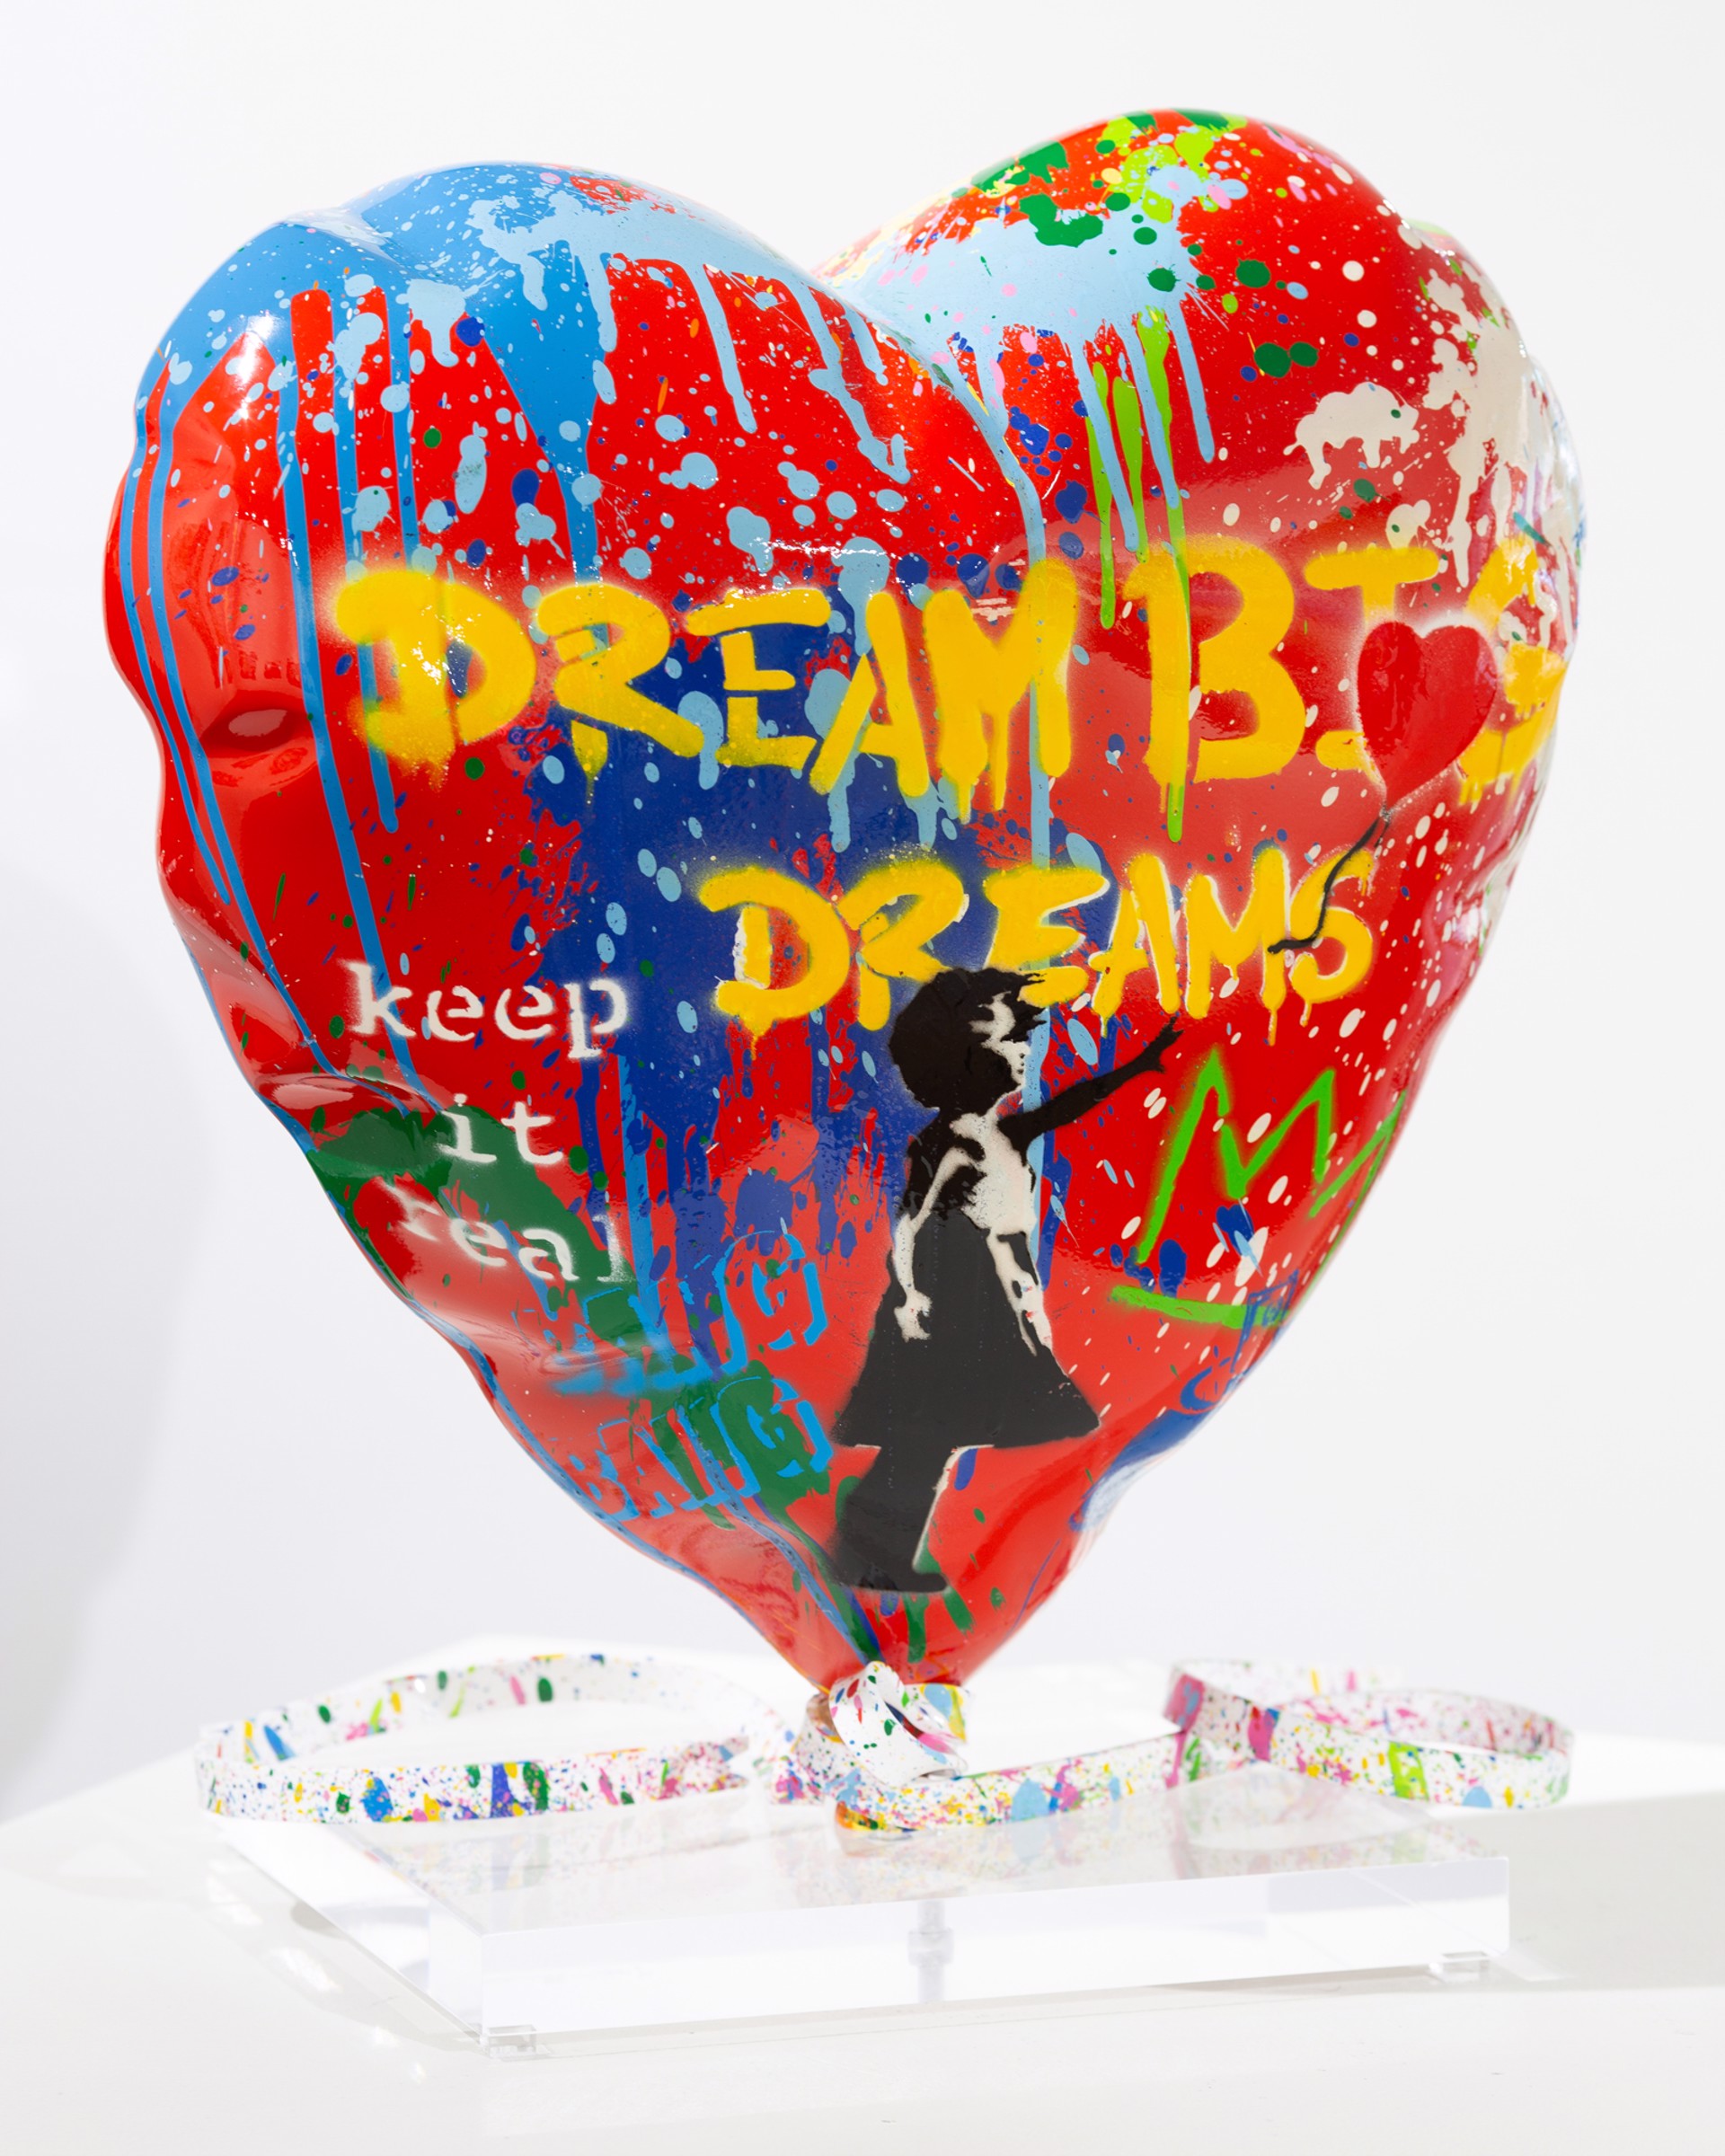 Balloon Heart by Mr. Brainwash